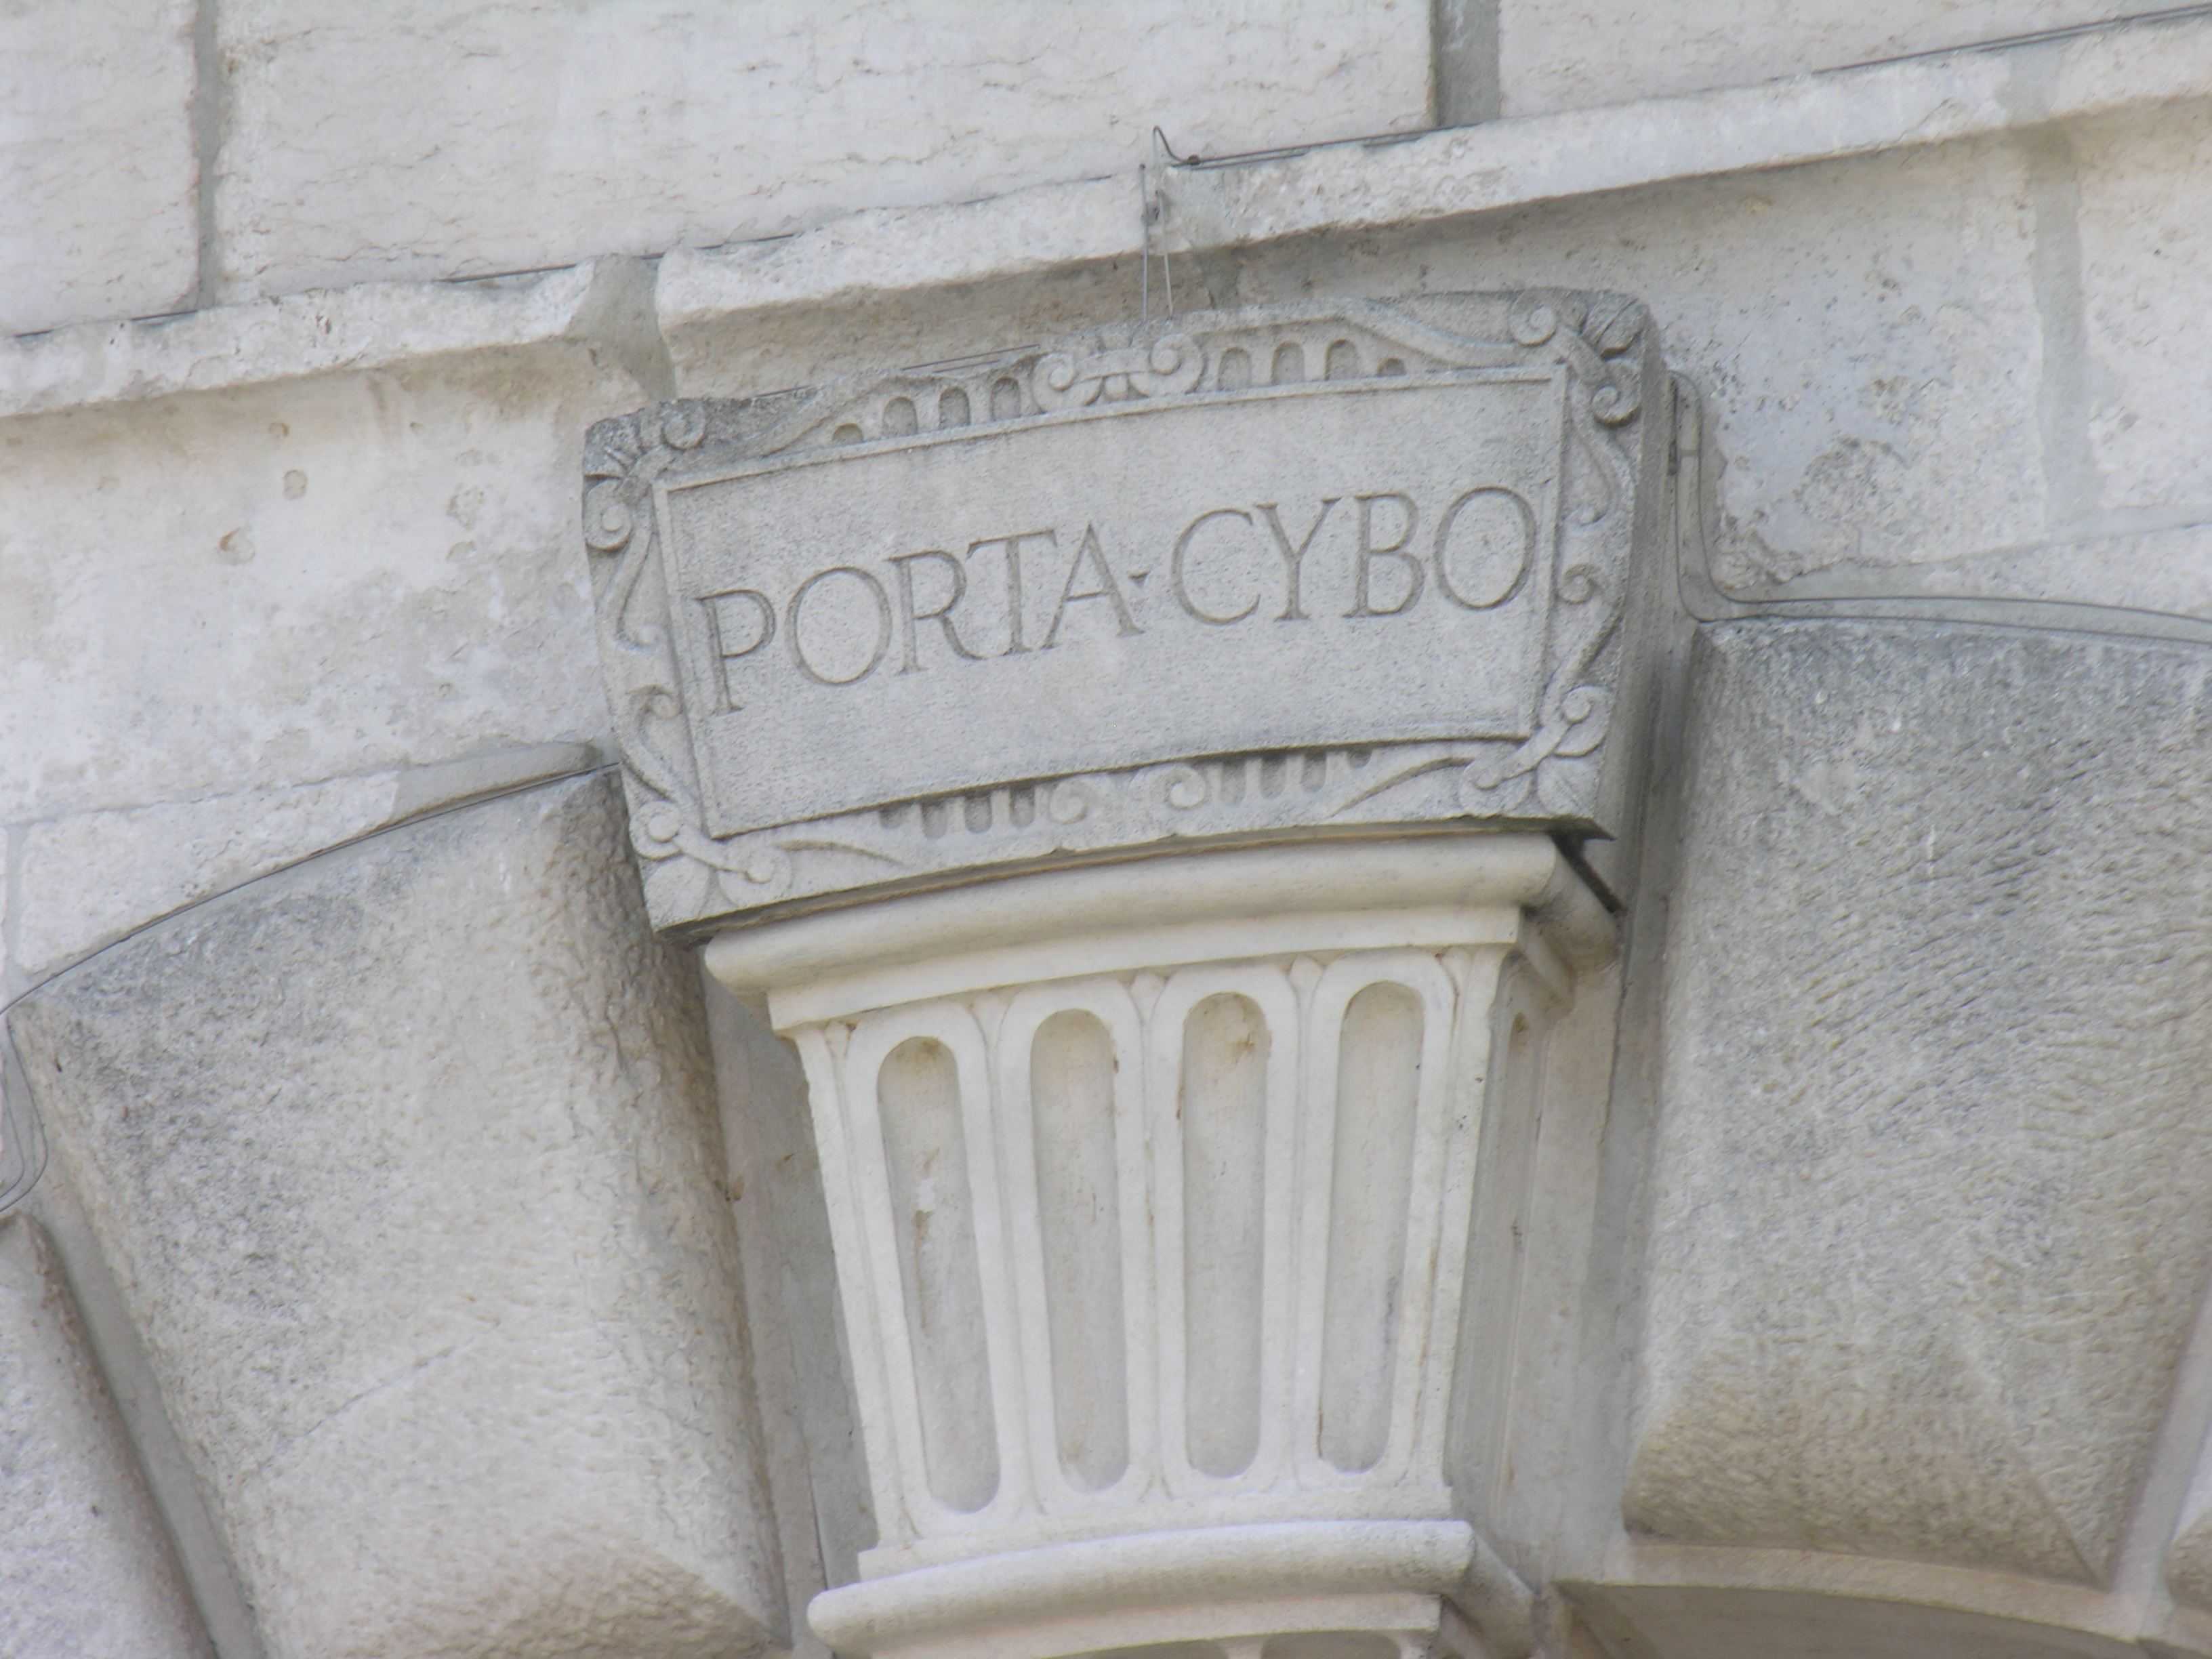 photo: https://upload.wikimedia.org/wikipedia/commons/4/40/Porta_serrata_porta_cybo.JPG